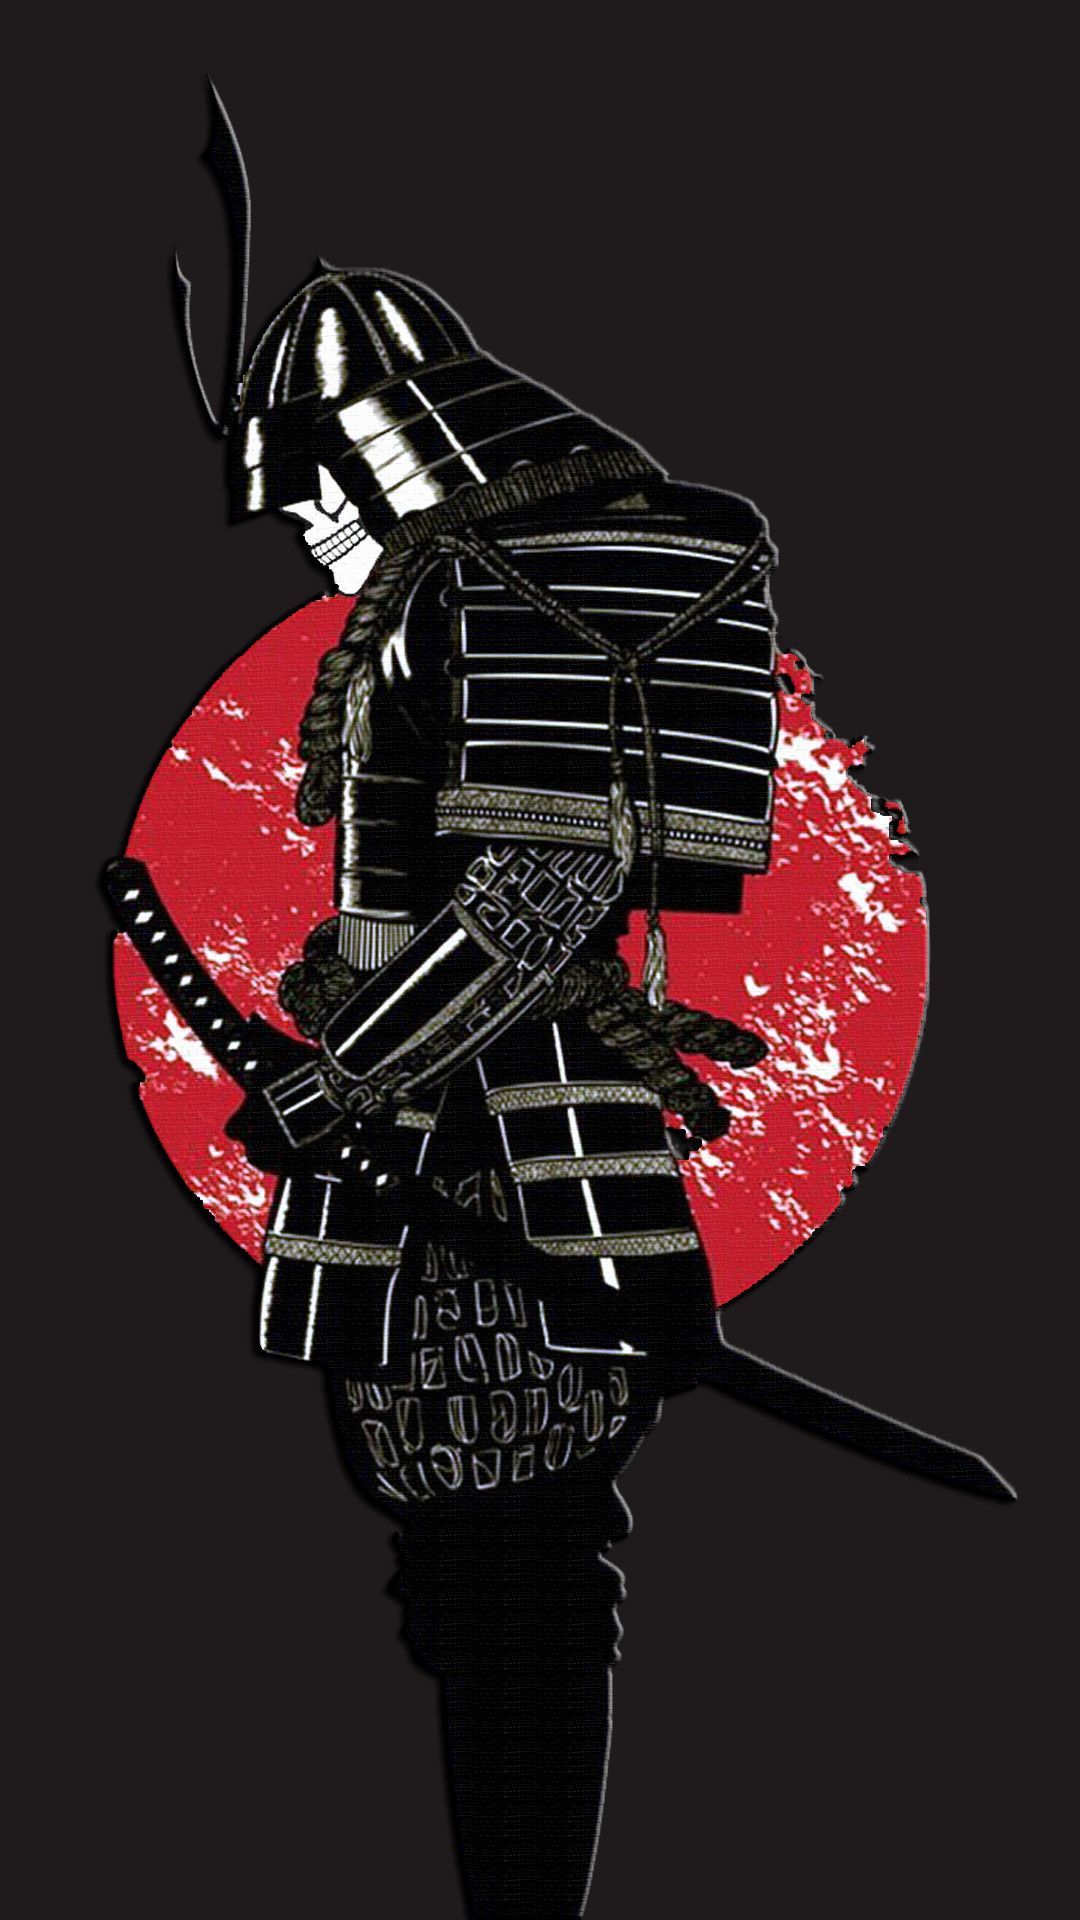 HD Samurai Wallpaper. Samurai wallpaper, Samurai warrior tattoo, Samurai artwork